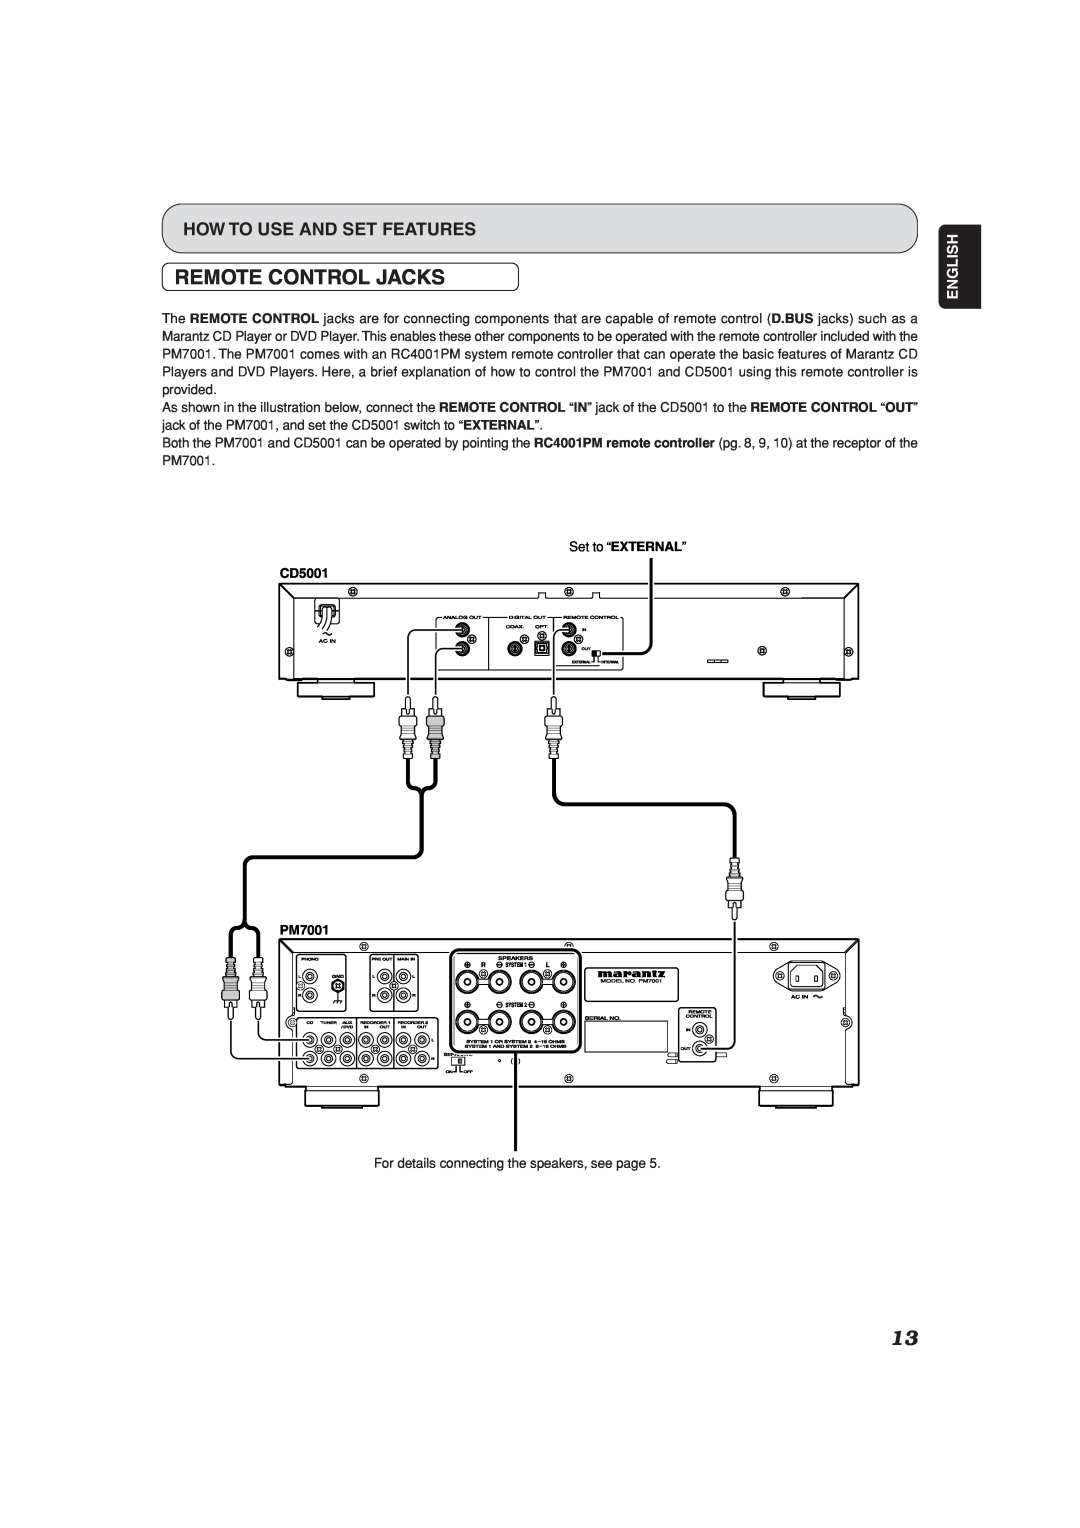 Marantz PM7001KI manual Remote Control Jacks, How To Use And Set Features, English, CD5001 PM7001 